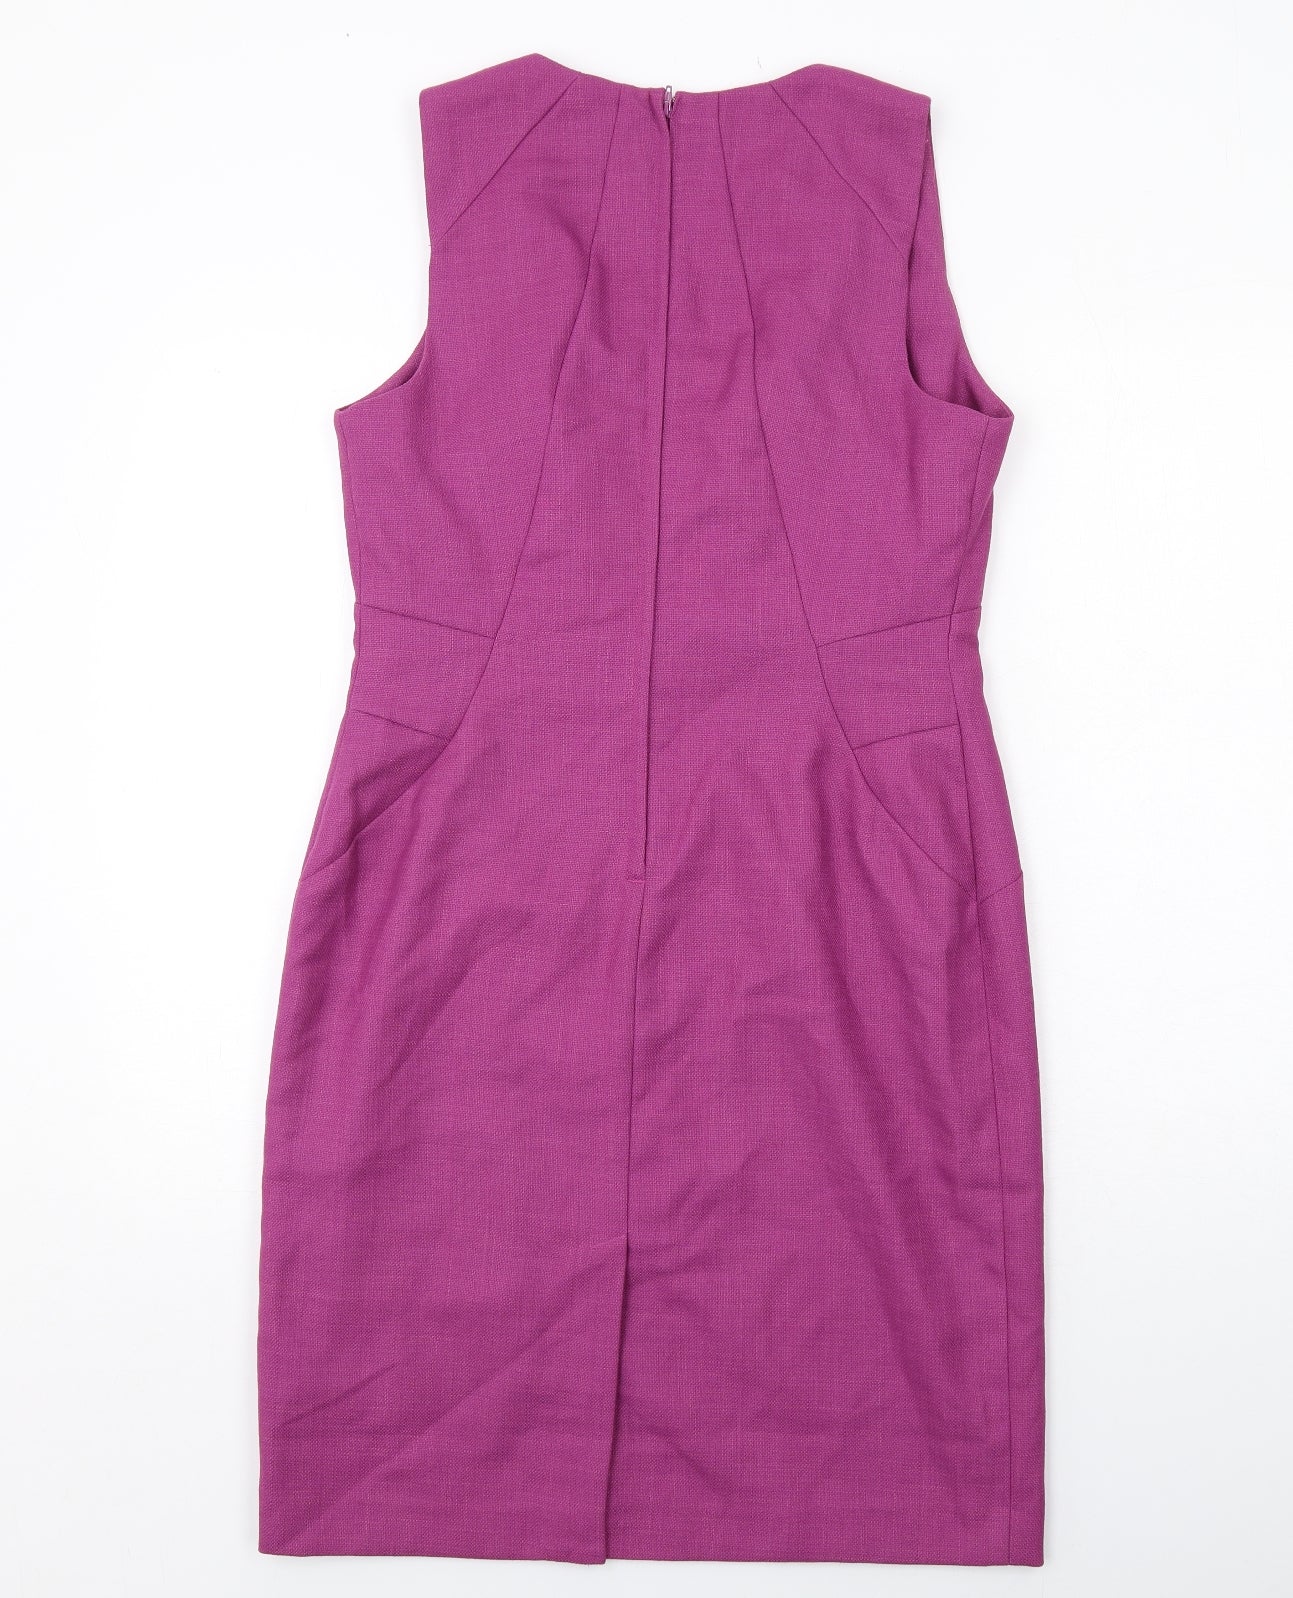 NEXT Womens Purple Polyester Shift Size 14 Square Neck Zip